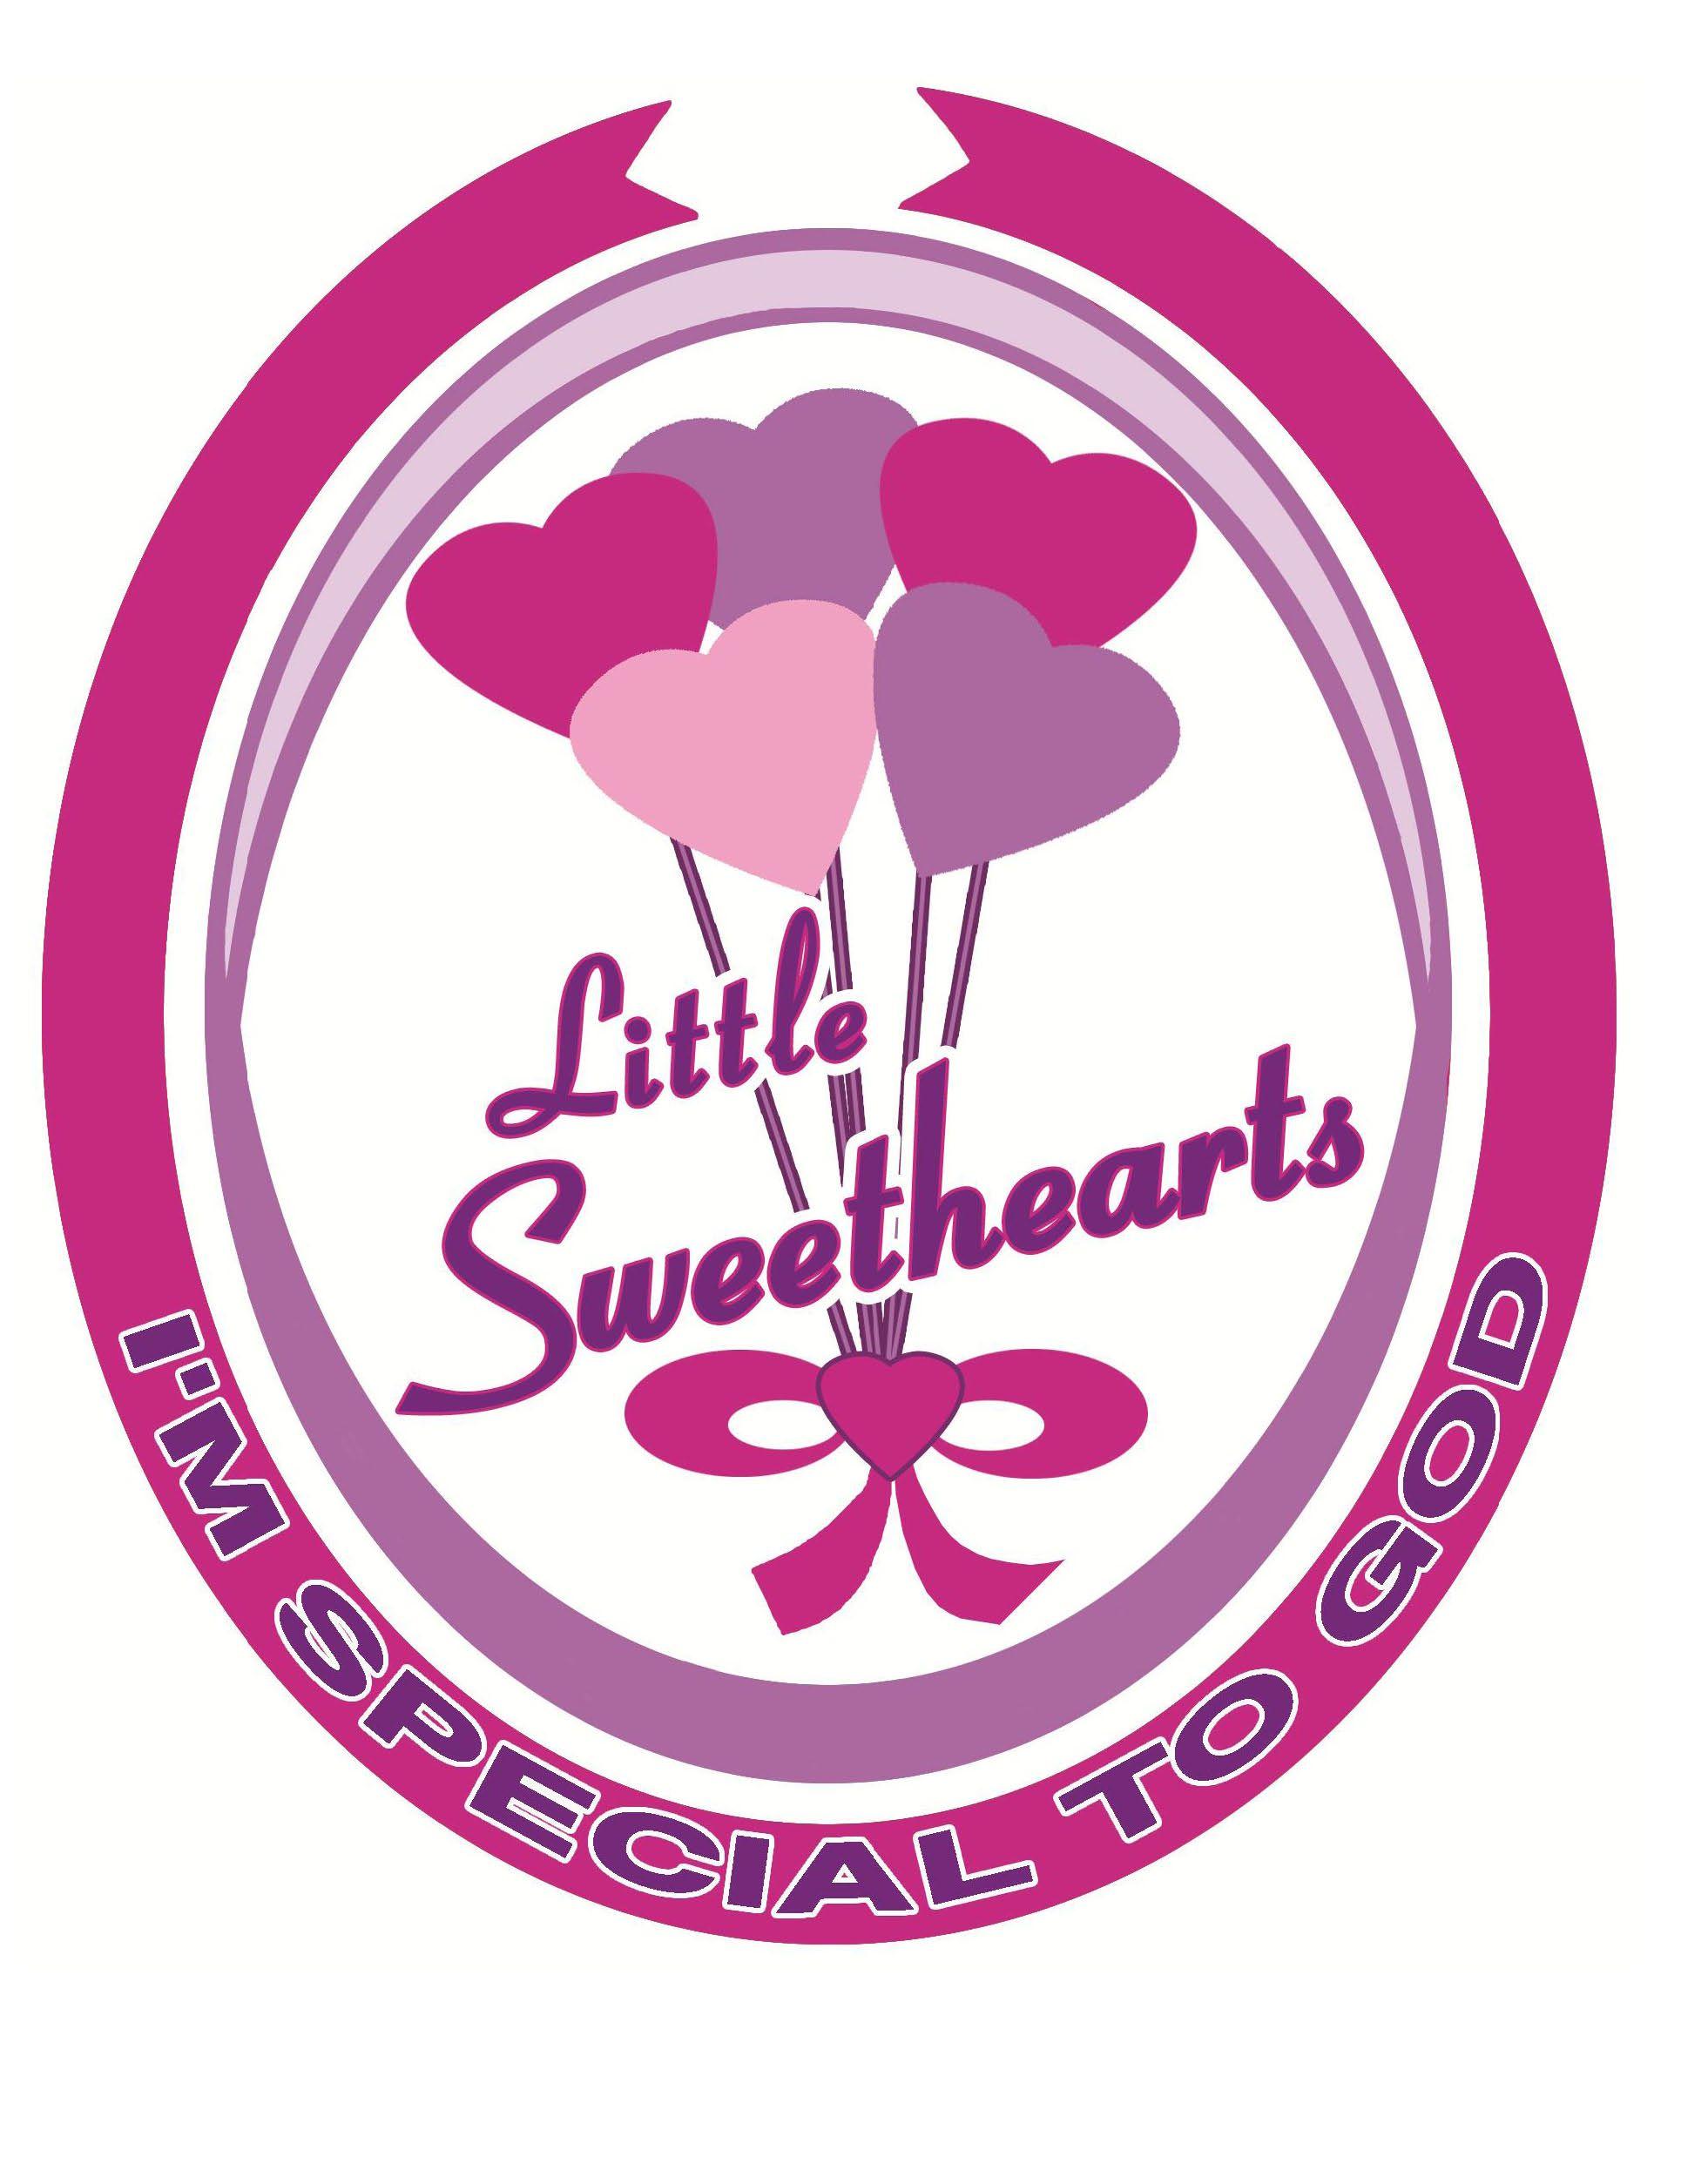 Sweethearts Logo - Little Sweethearts | The Quad